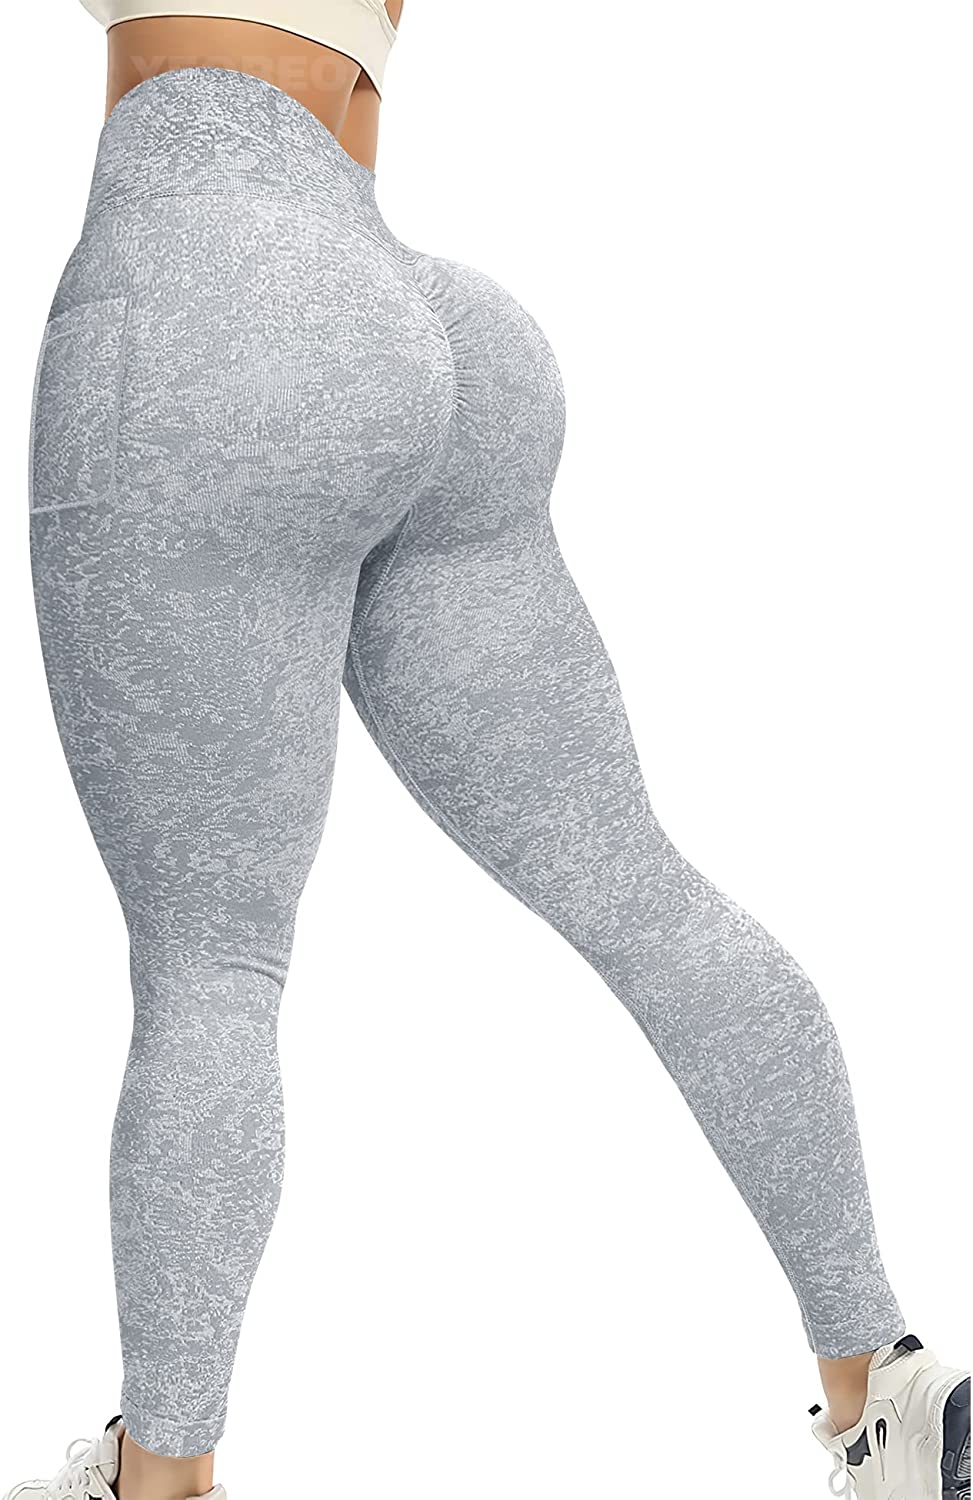 Xersion / Black Gray Camo Stretch Athletic Leggings Yoga Pants / Girl's XXS  4-5